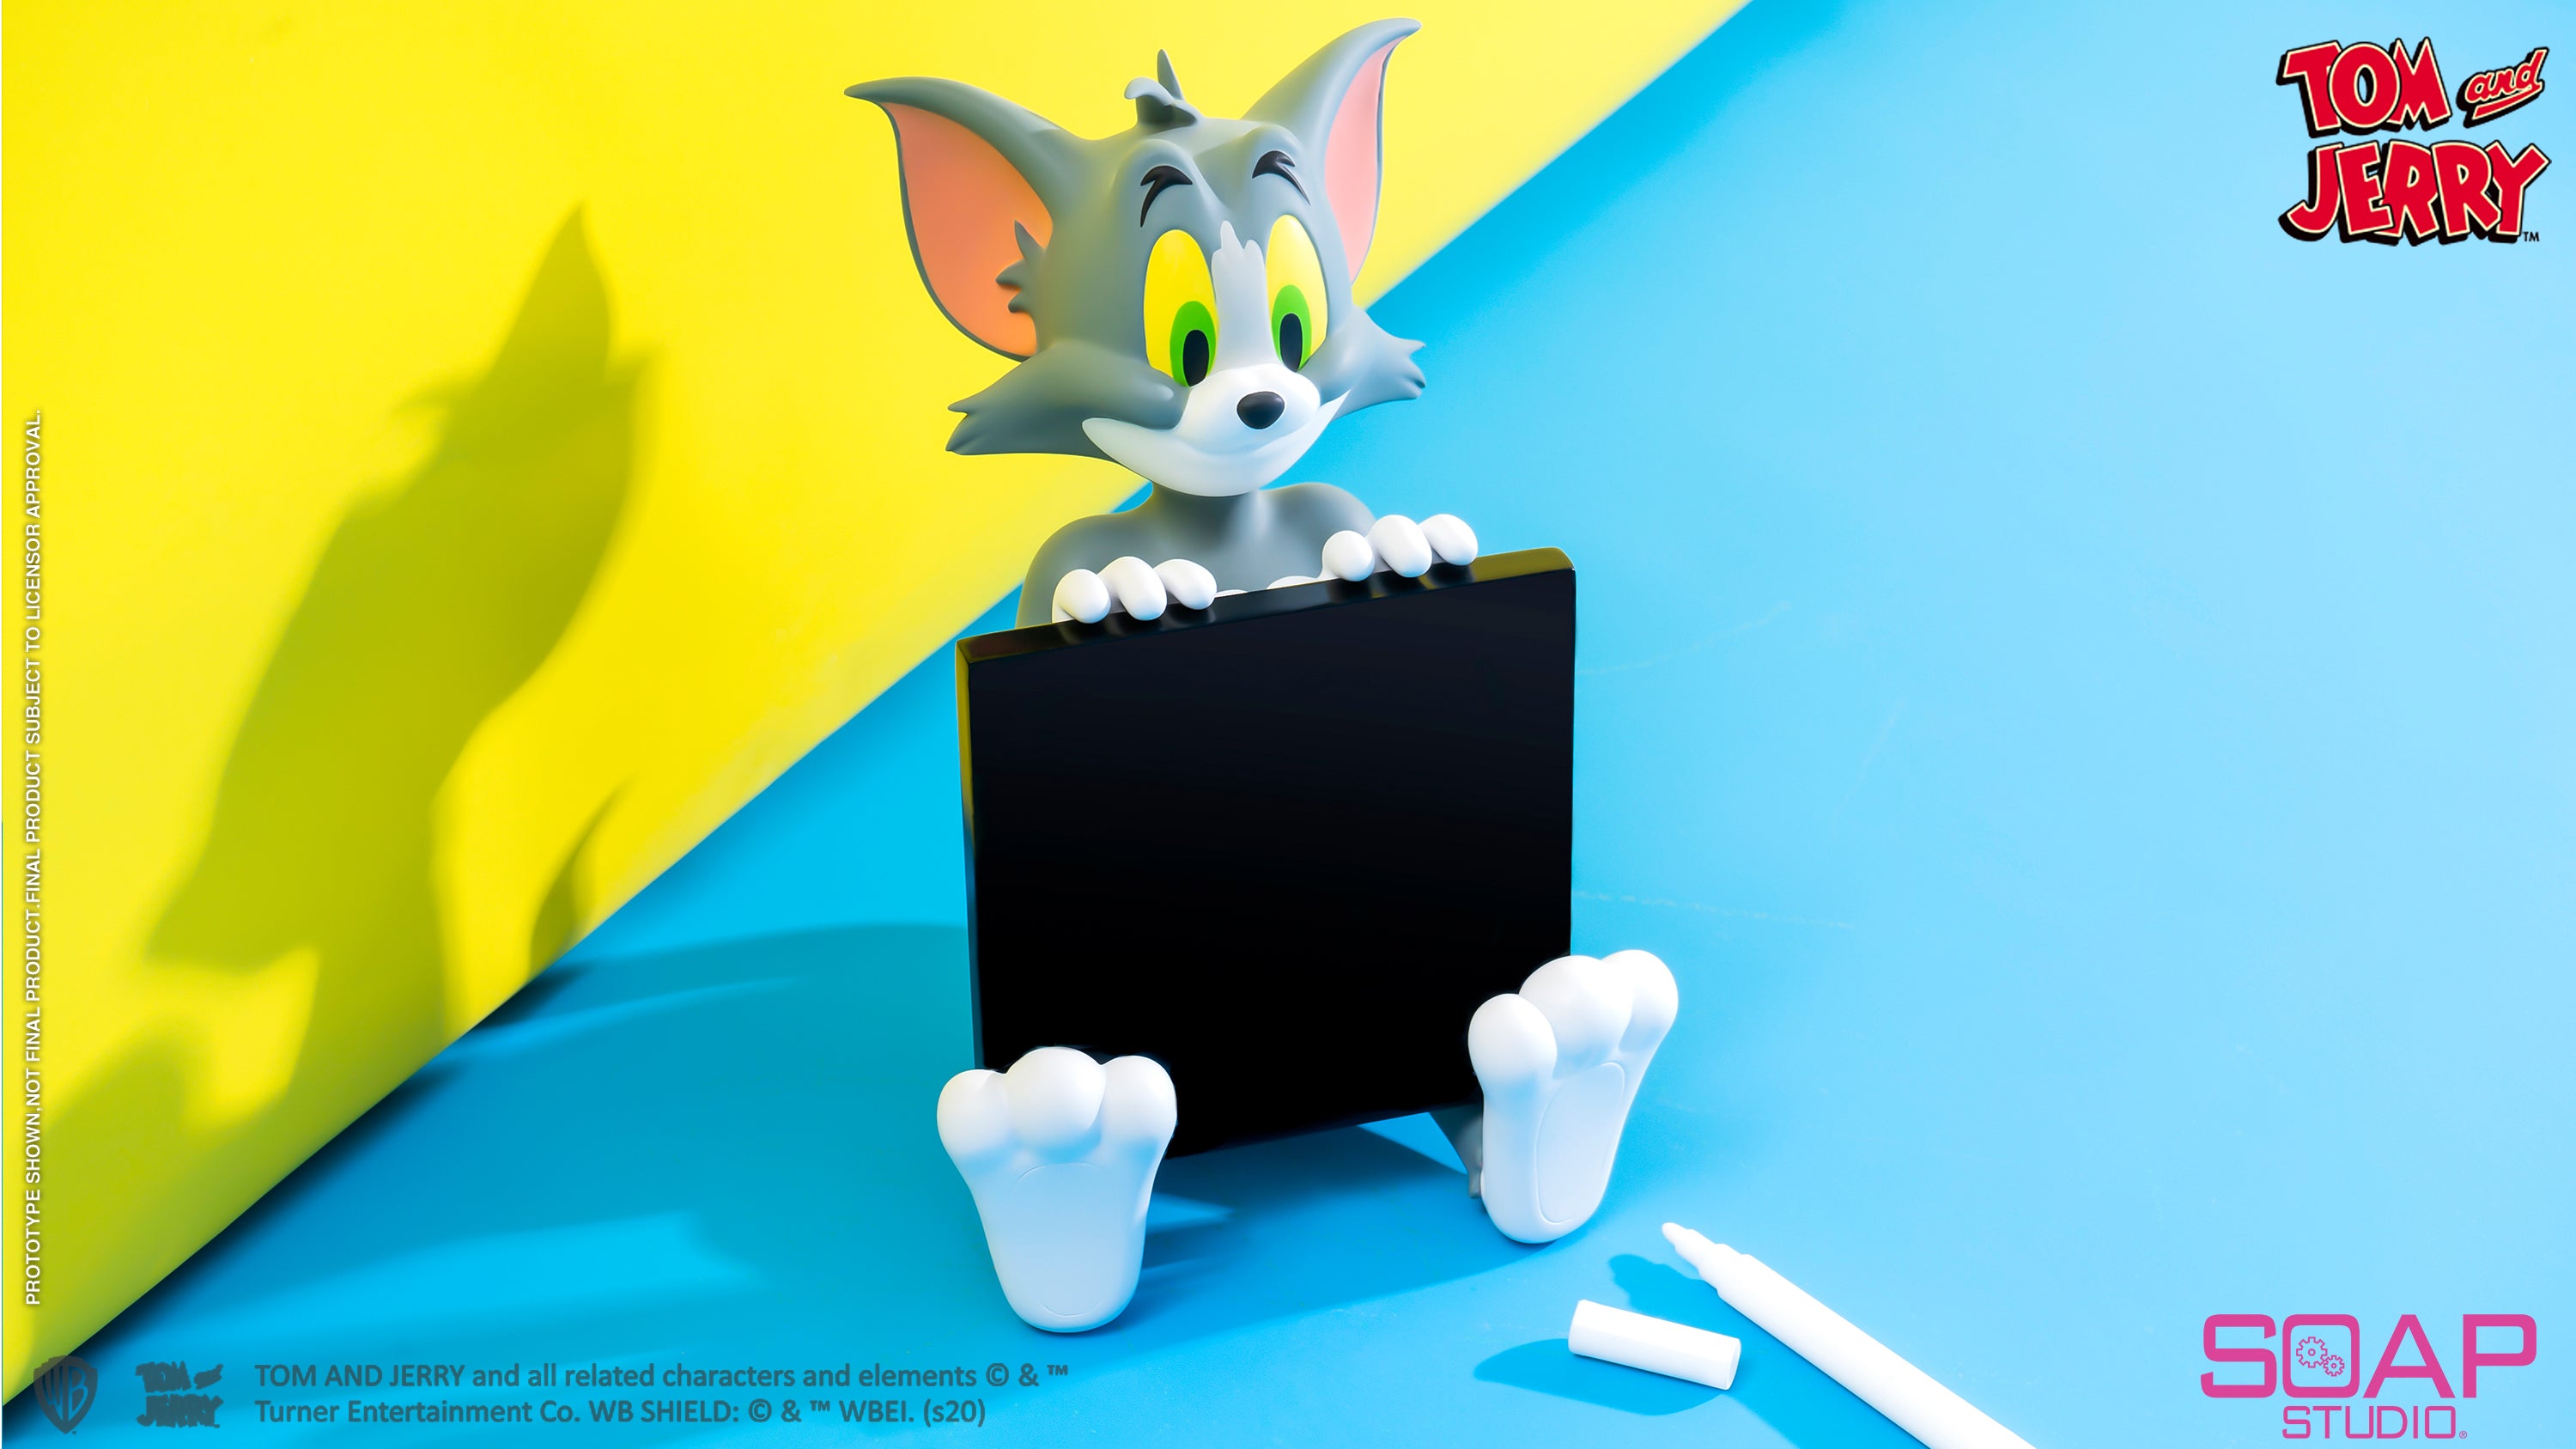 Soap Studio CA115 Tom and Jerry: Memo Pad Holder